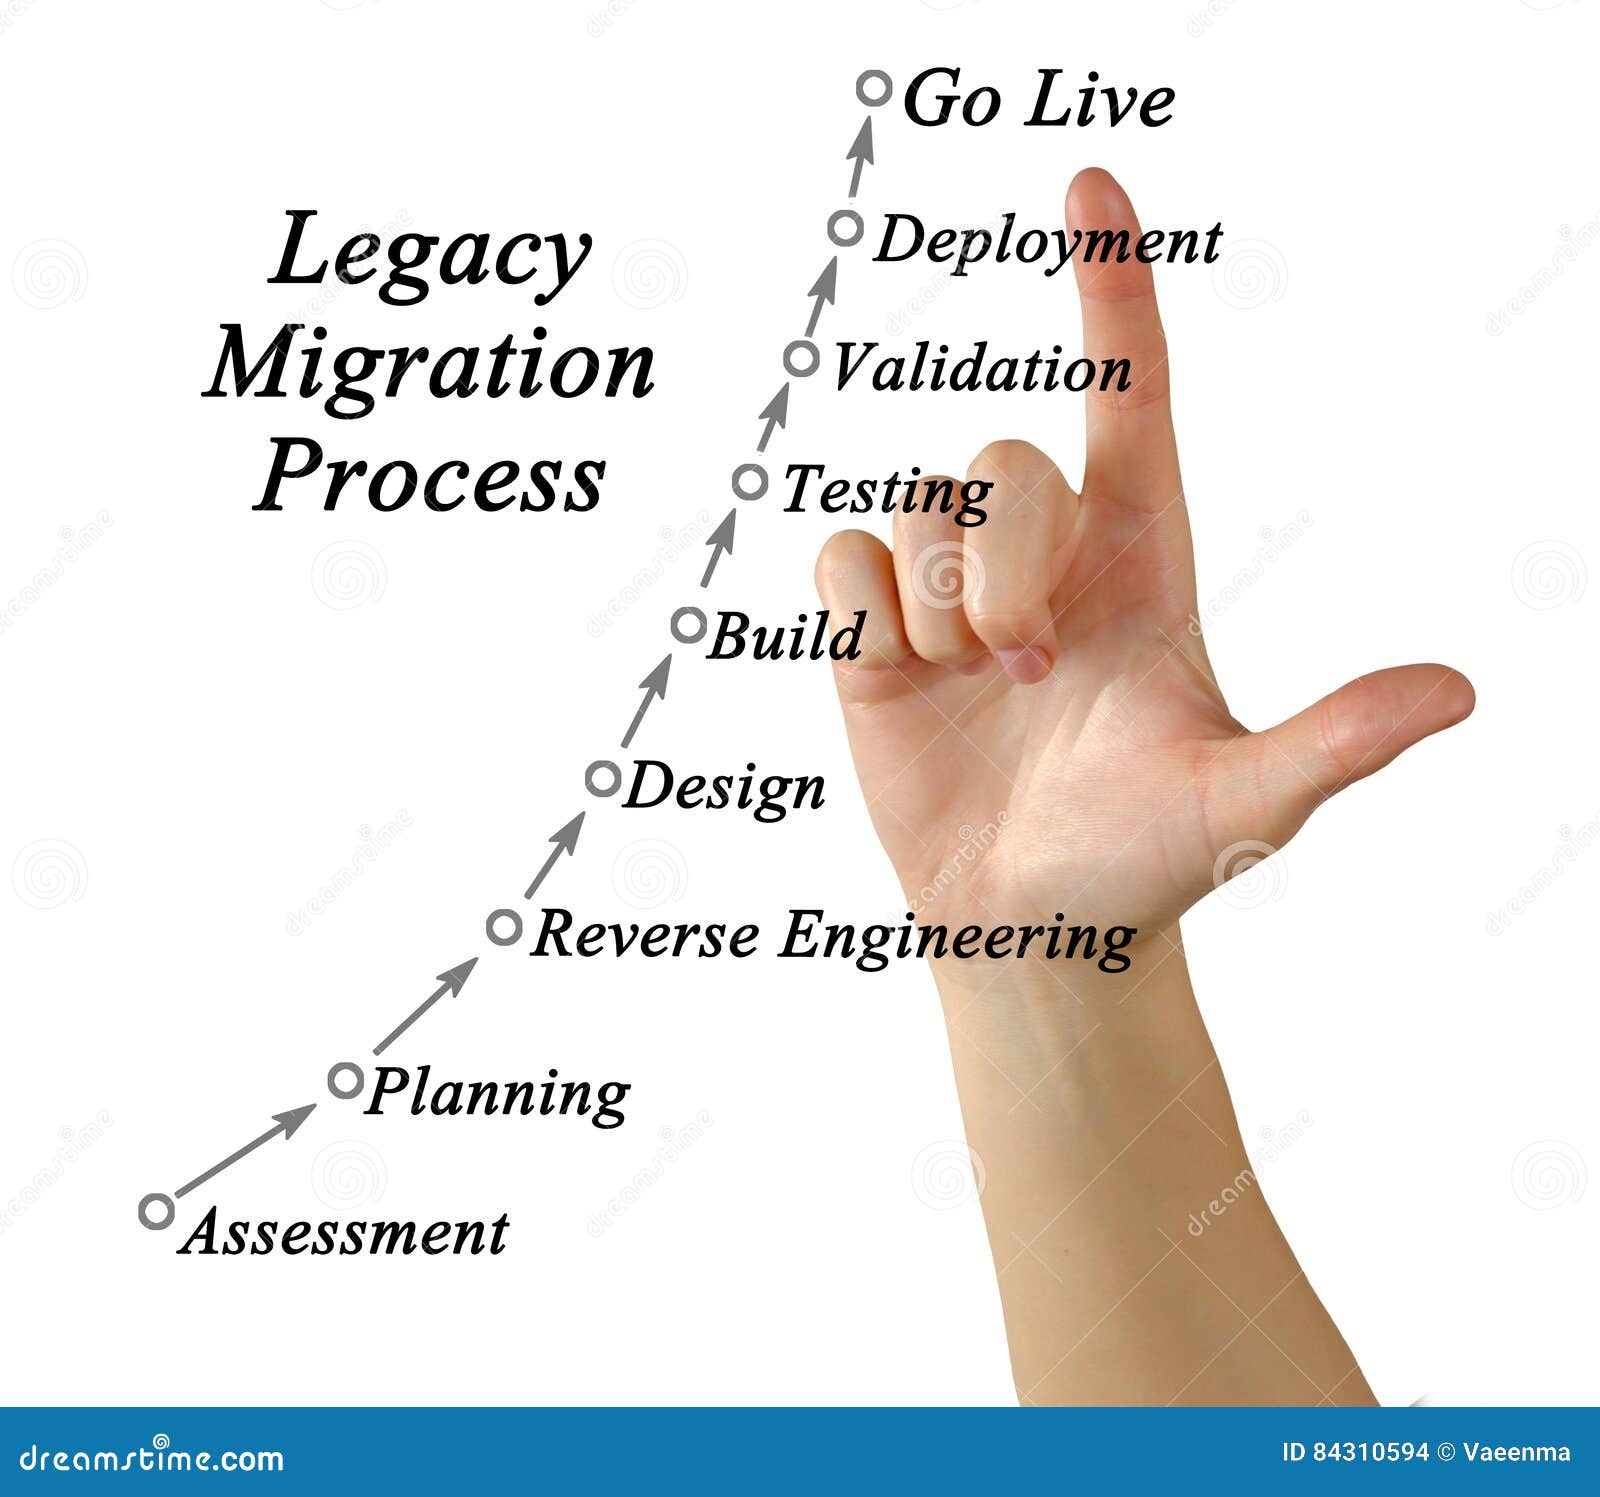 legacy migration process